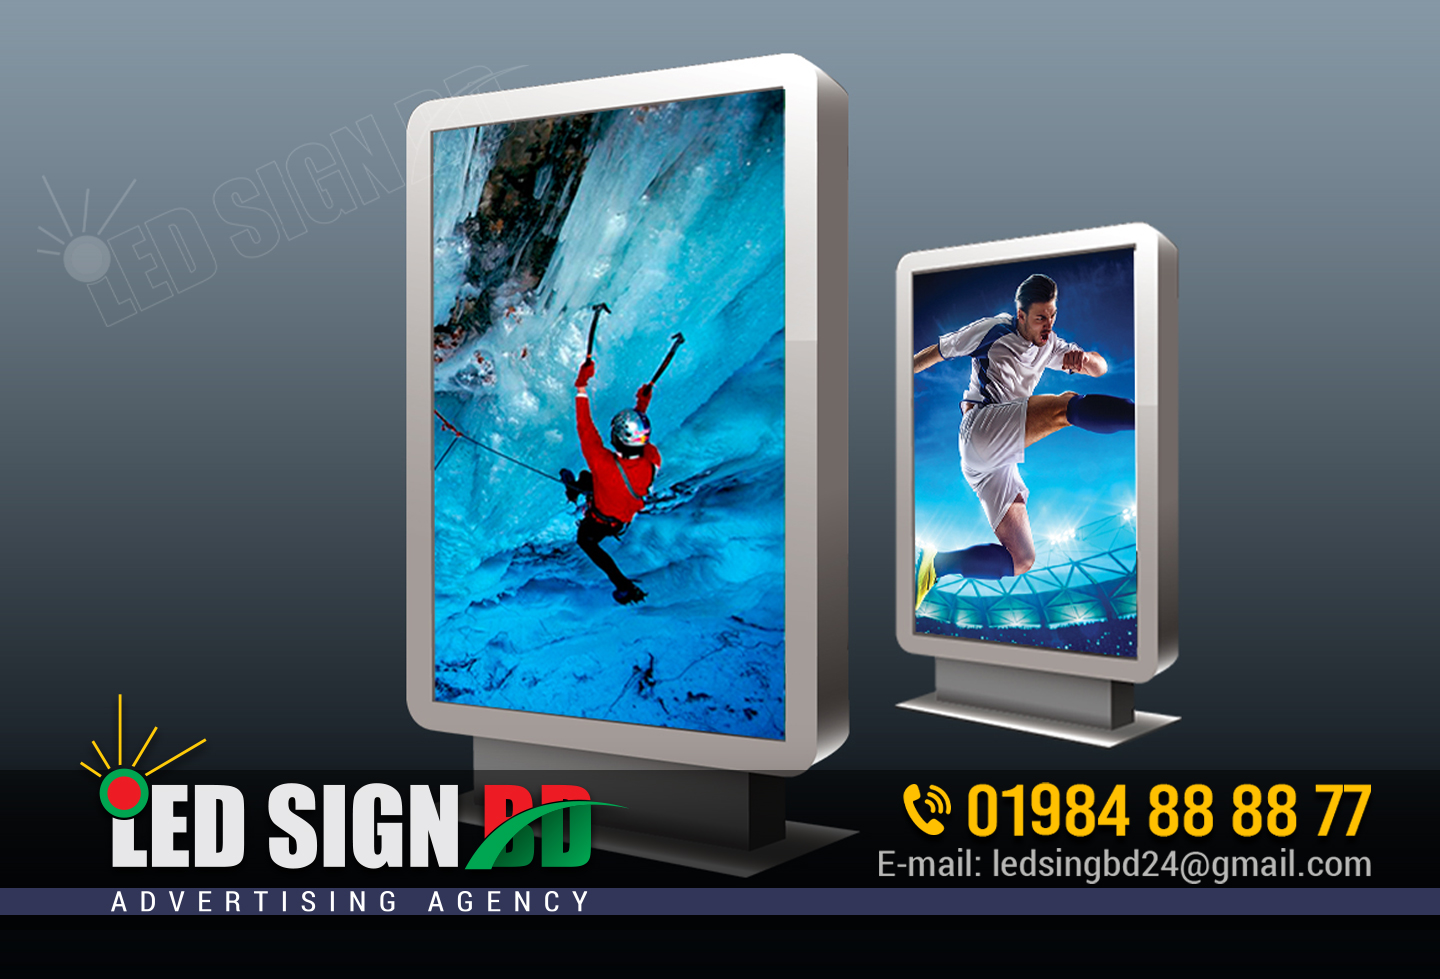 Stand Advertising Led Display Signage provider in Dhaka Bangladesh, Moving Display Signage in Dhaka Bangladesh.